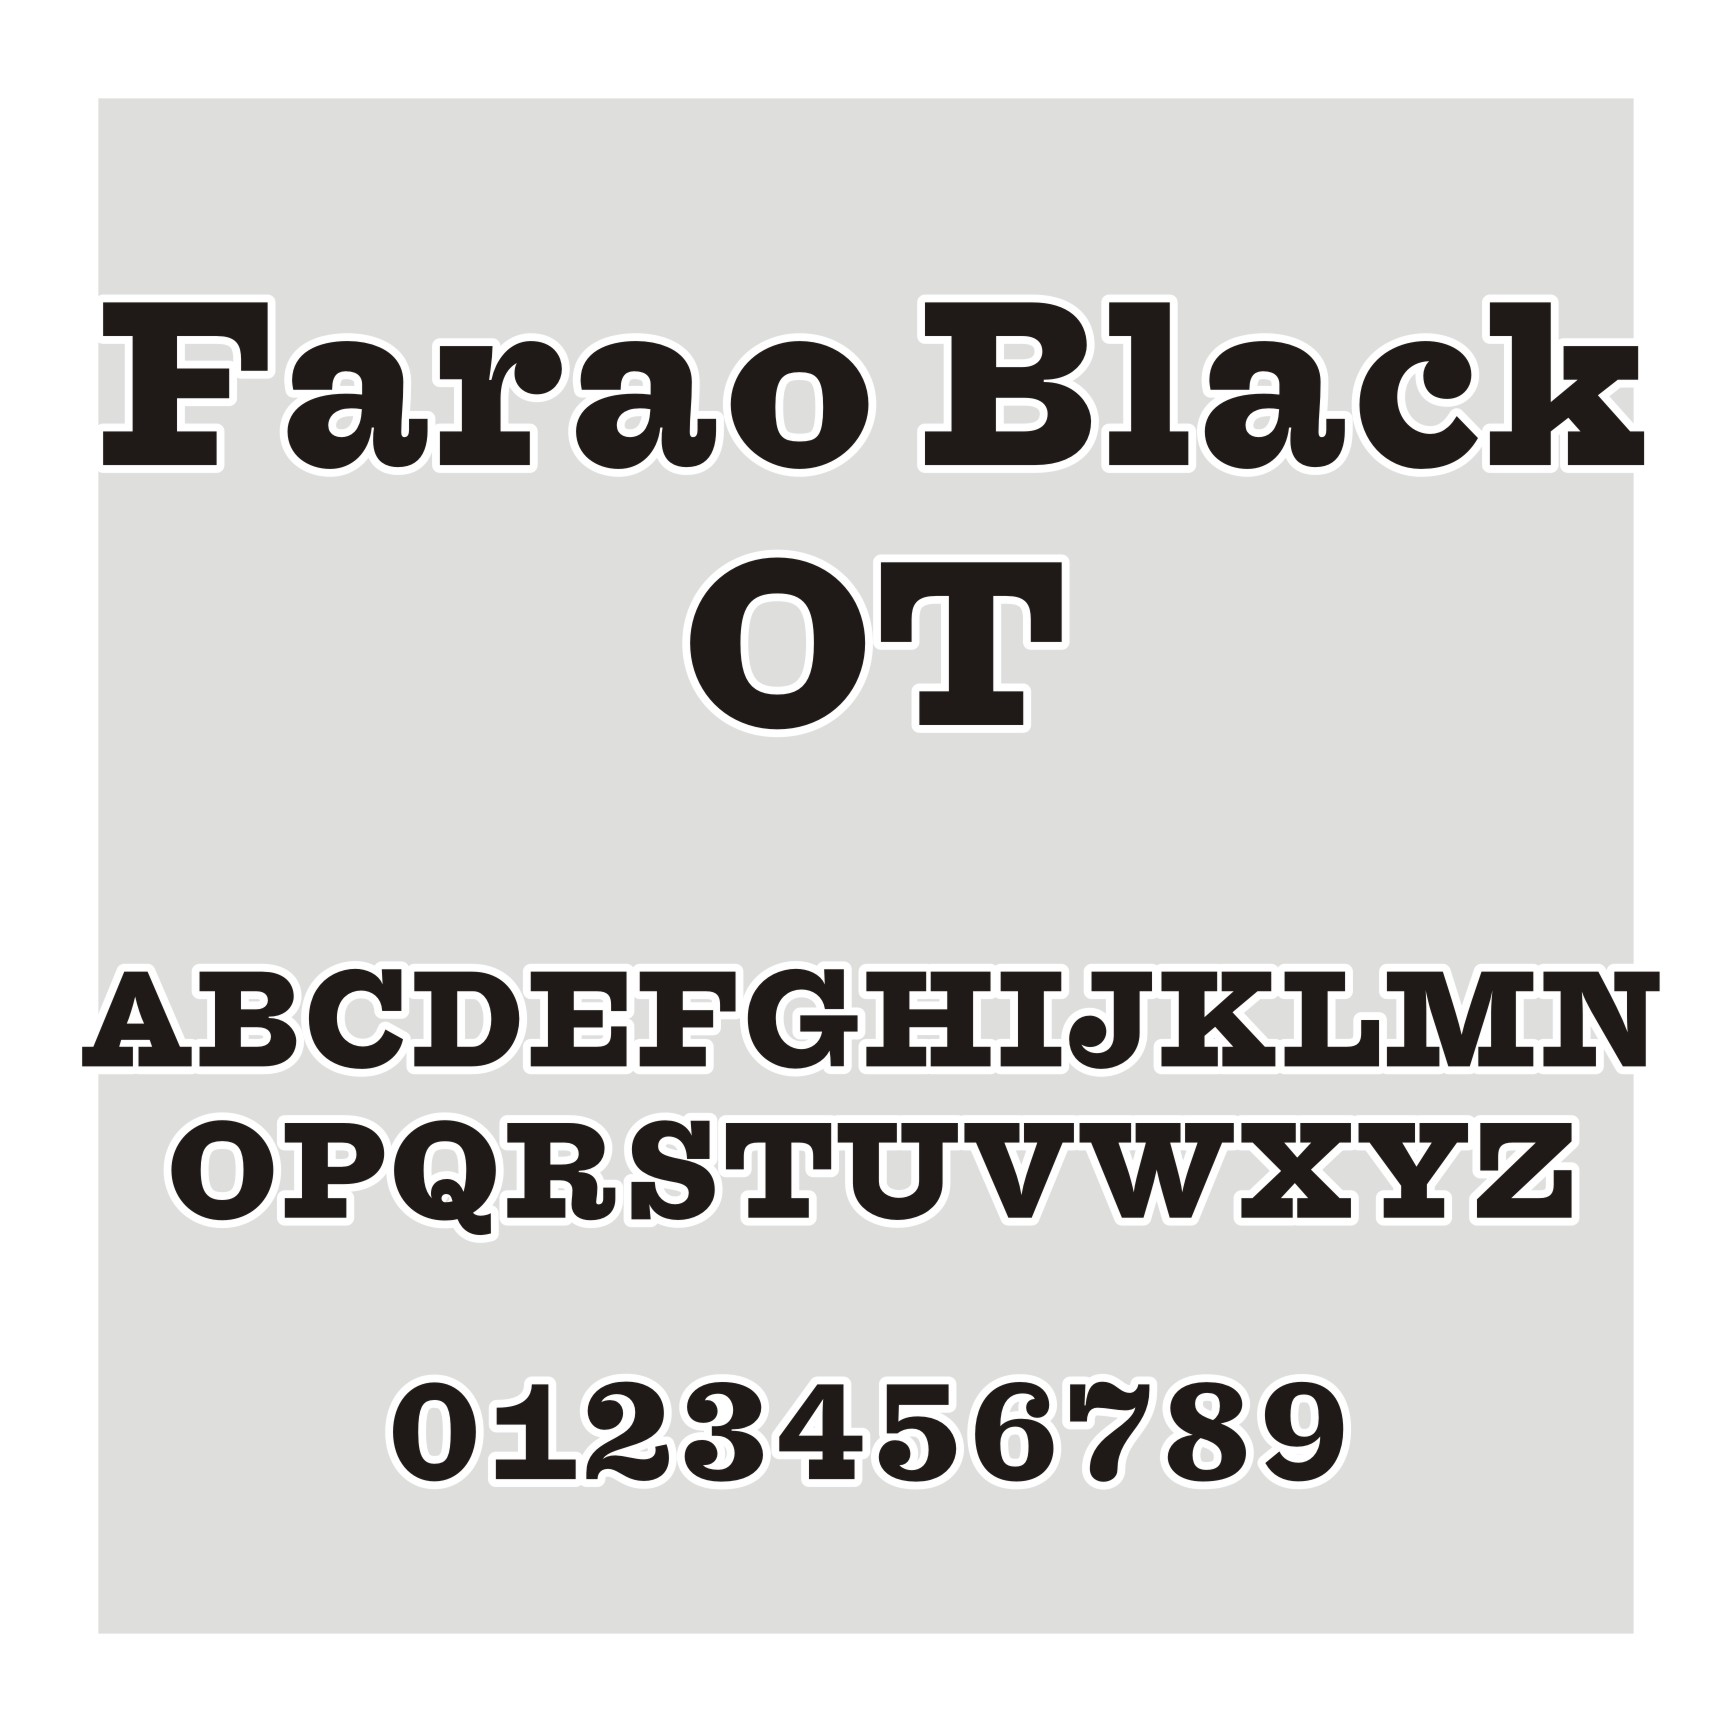 Farao Black OT